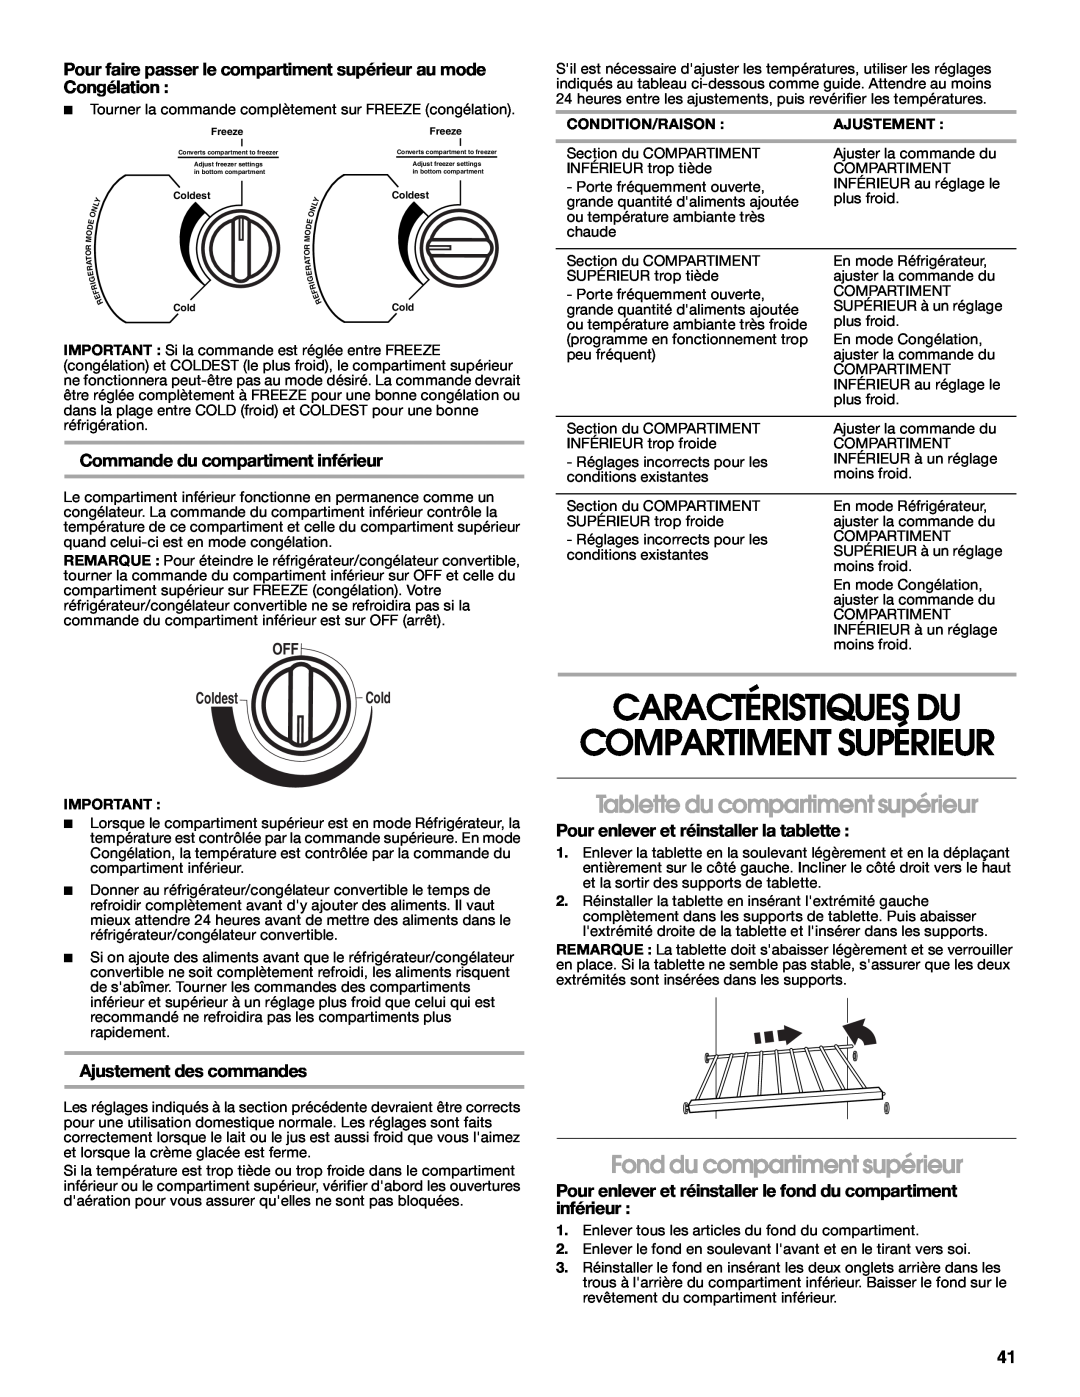 Whirlpool 2314466 manual Caractéristiques Du, Compartiment Supérieur, Tablette du compartiment supérieur, OFF ColdestCold 